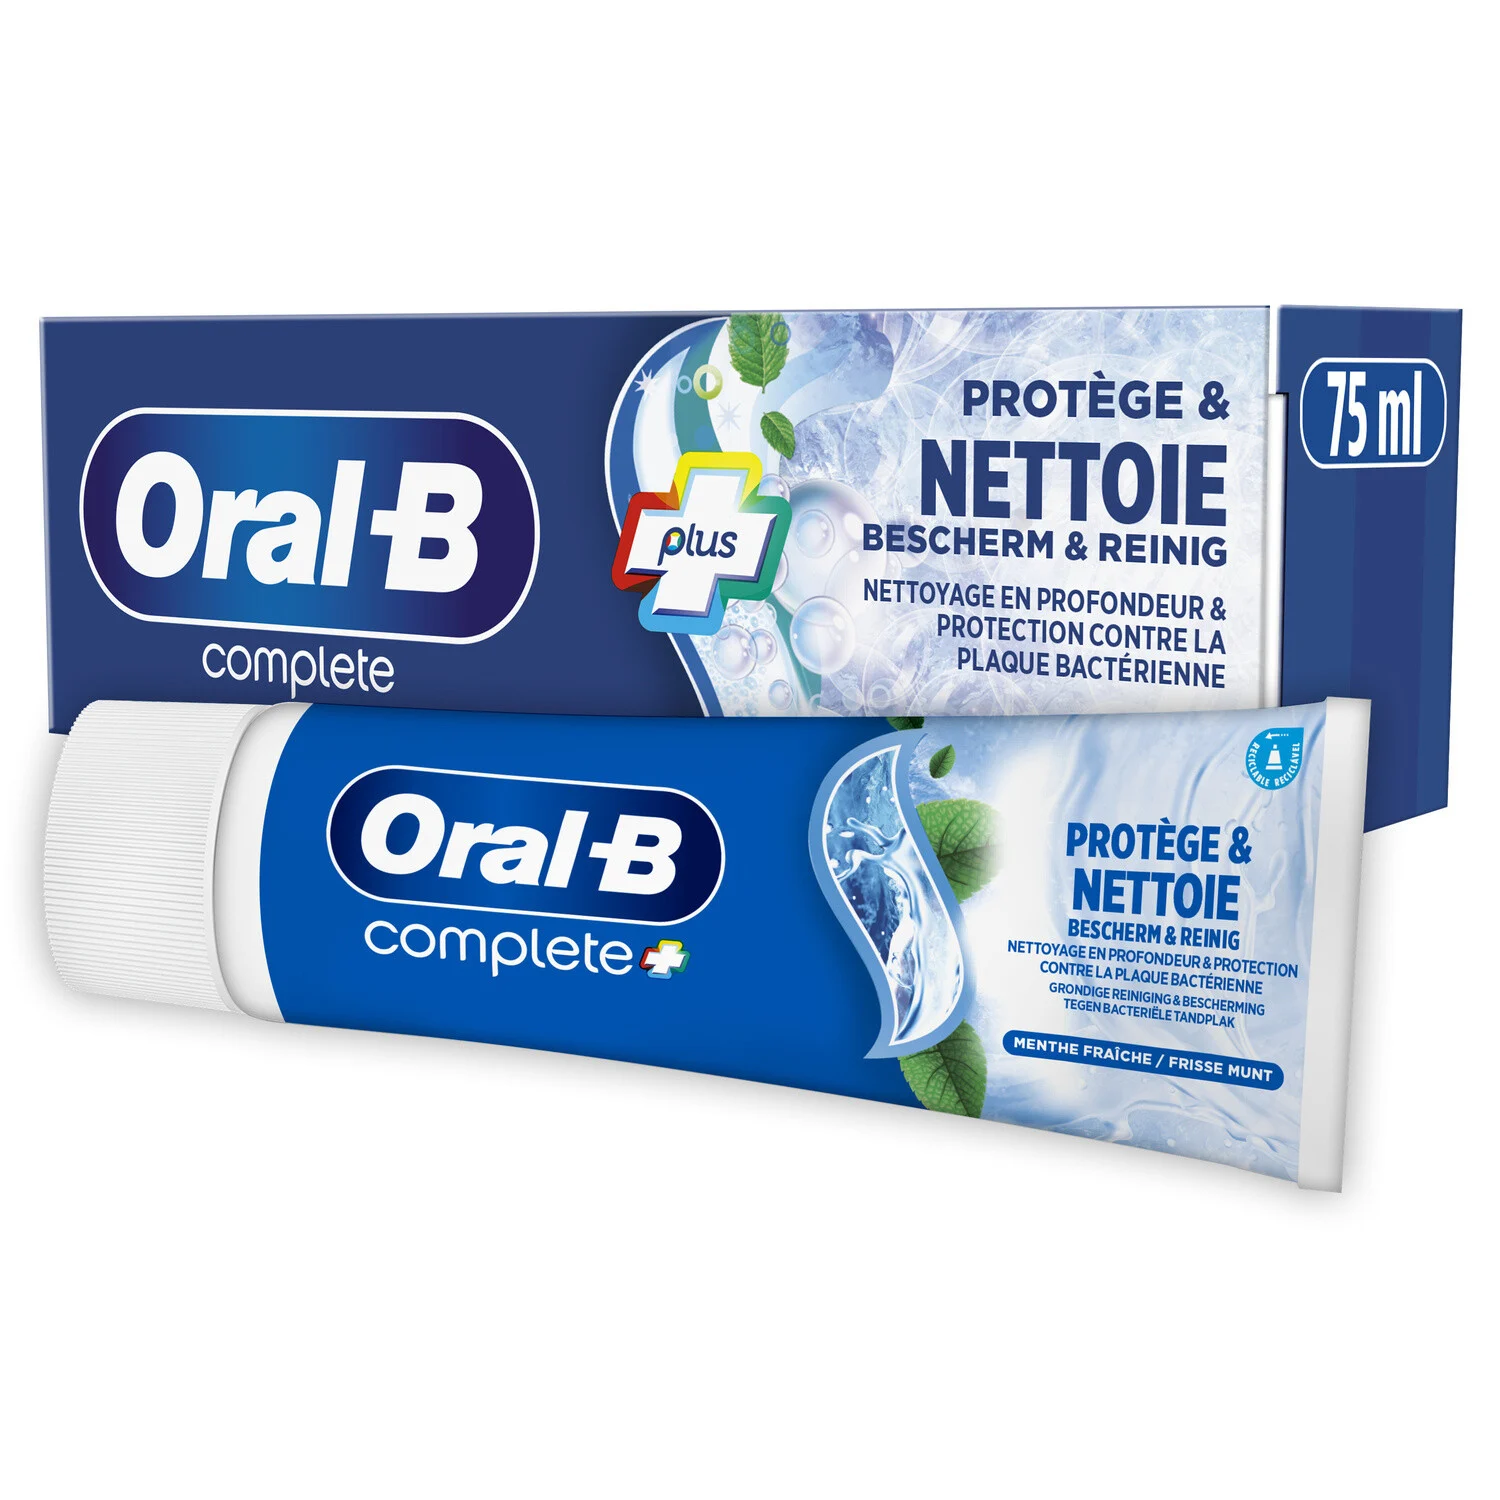 75 ml Oral B Dent Protege Net